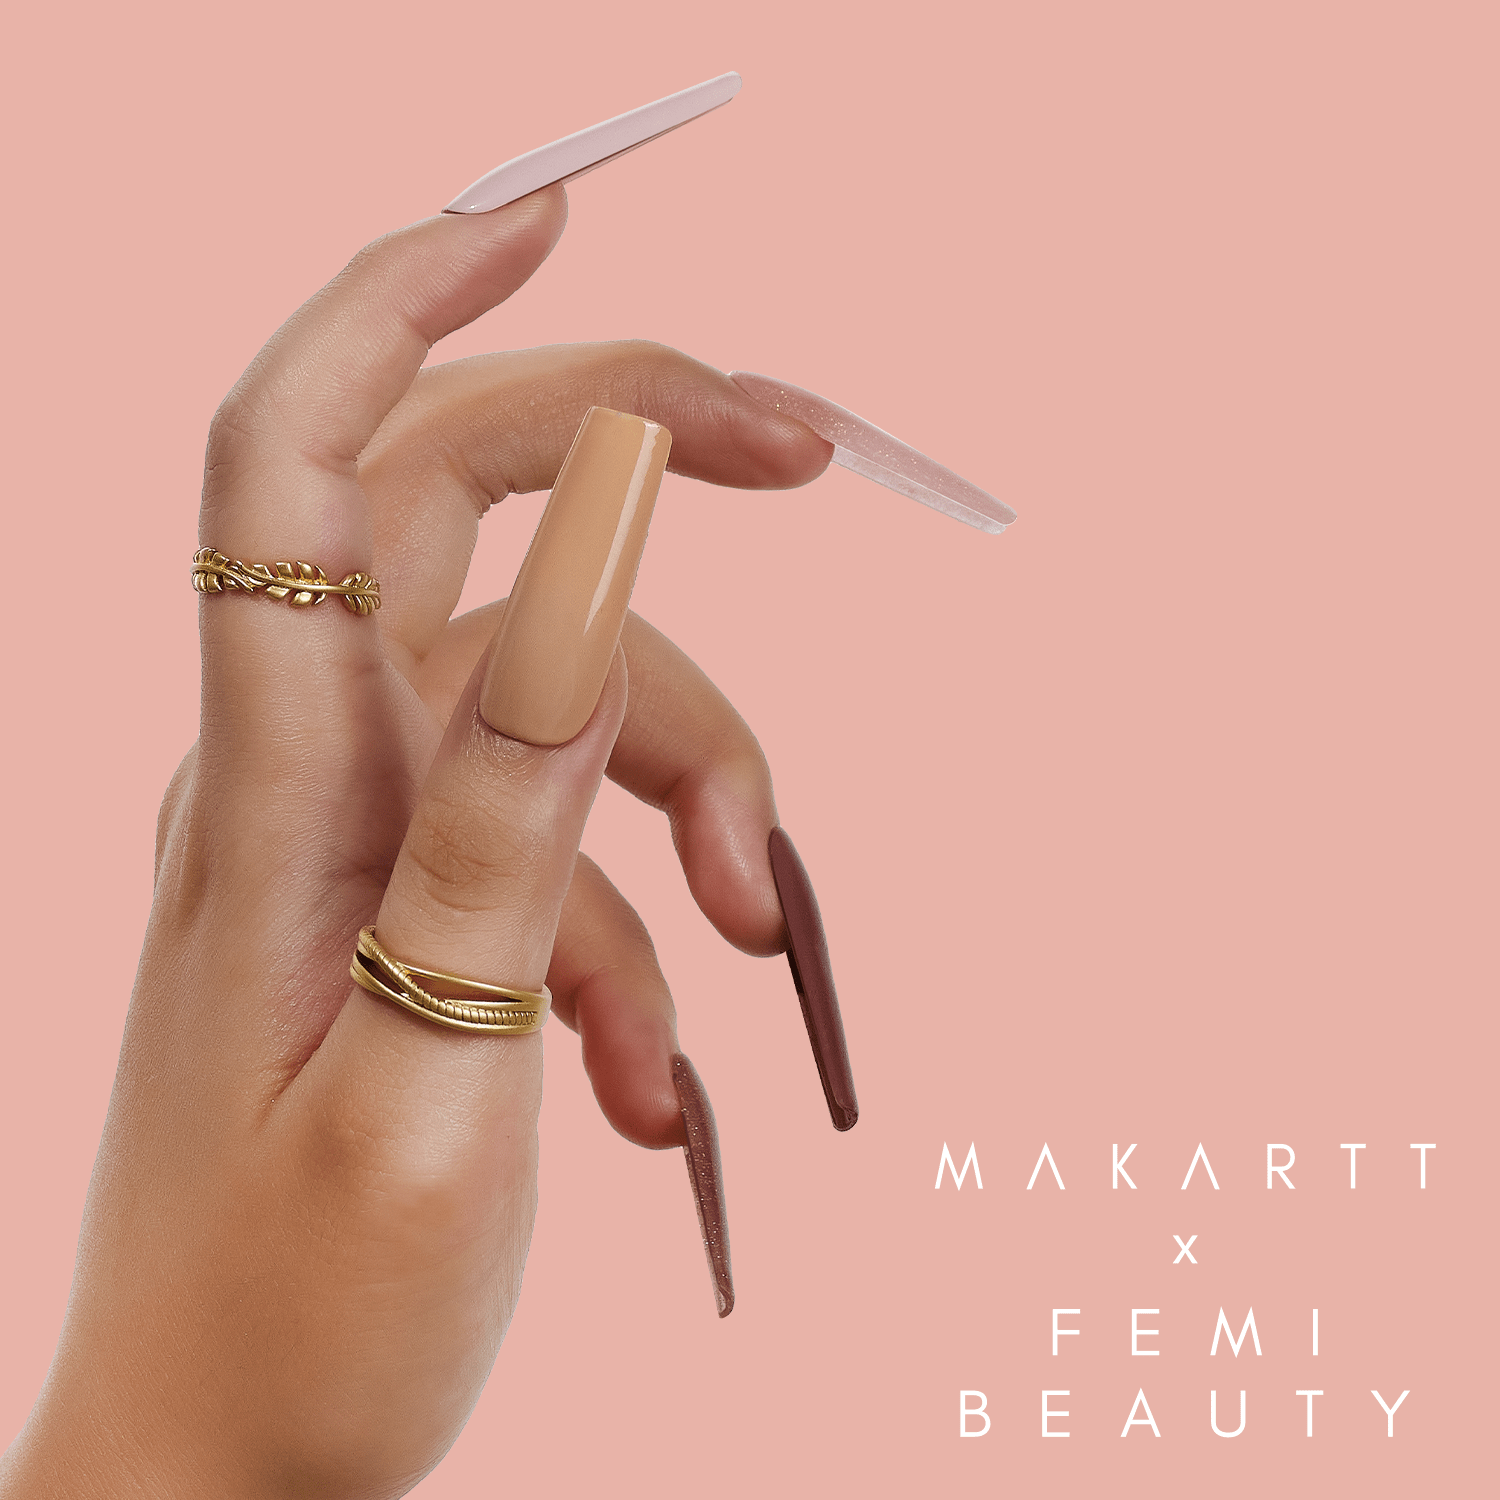 Femi Beauty x Makartt "Nude" Gel Polish Set